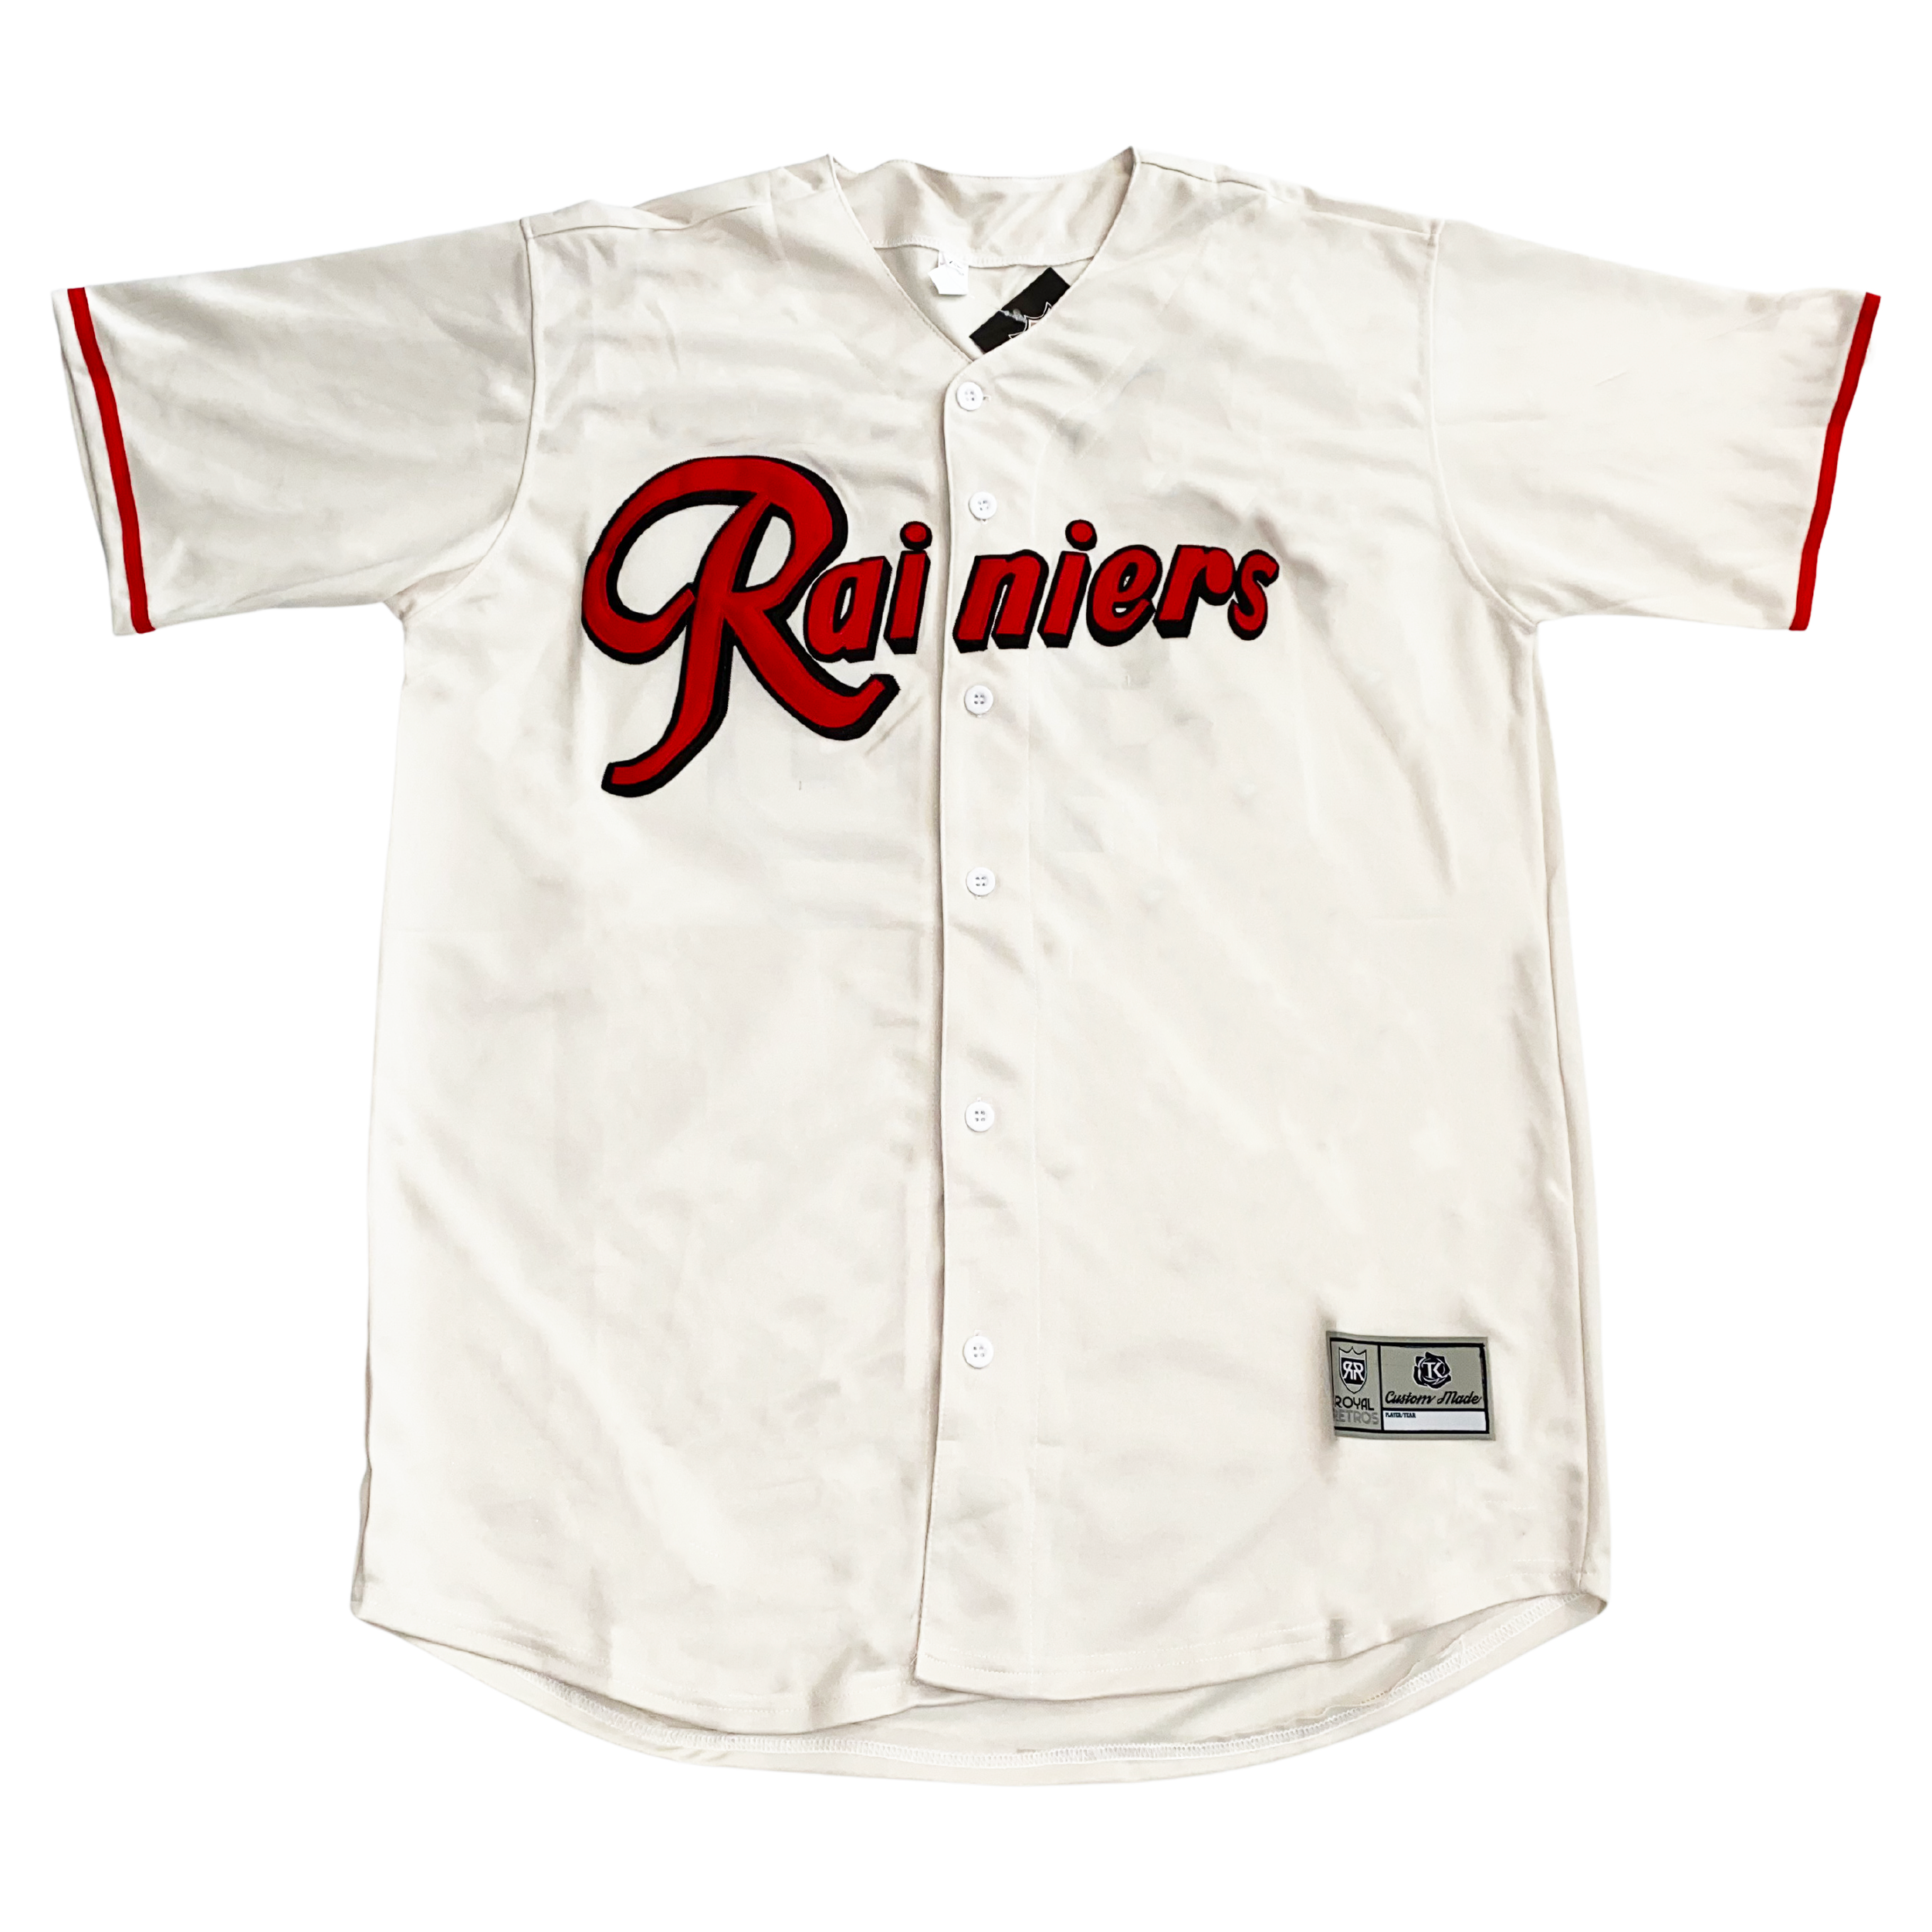 Seattle Rainiers Baseball Jerseys 1939 1941 1951 1953 1957 1961